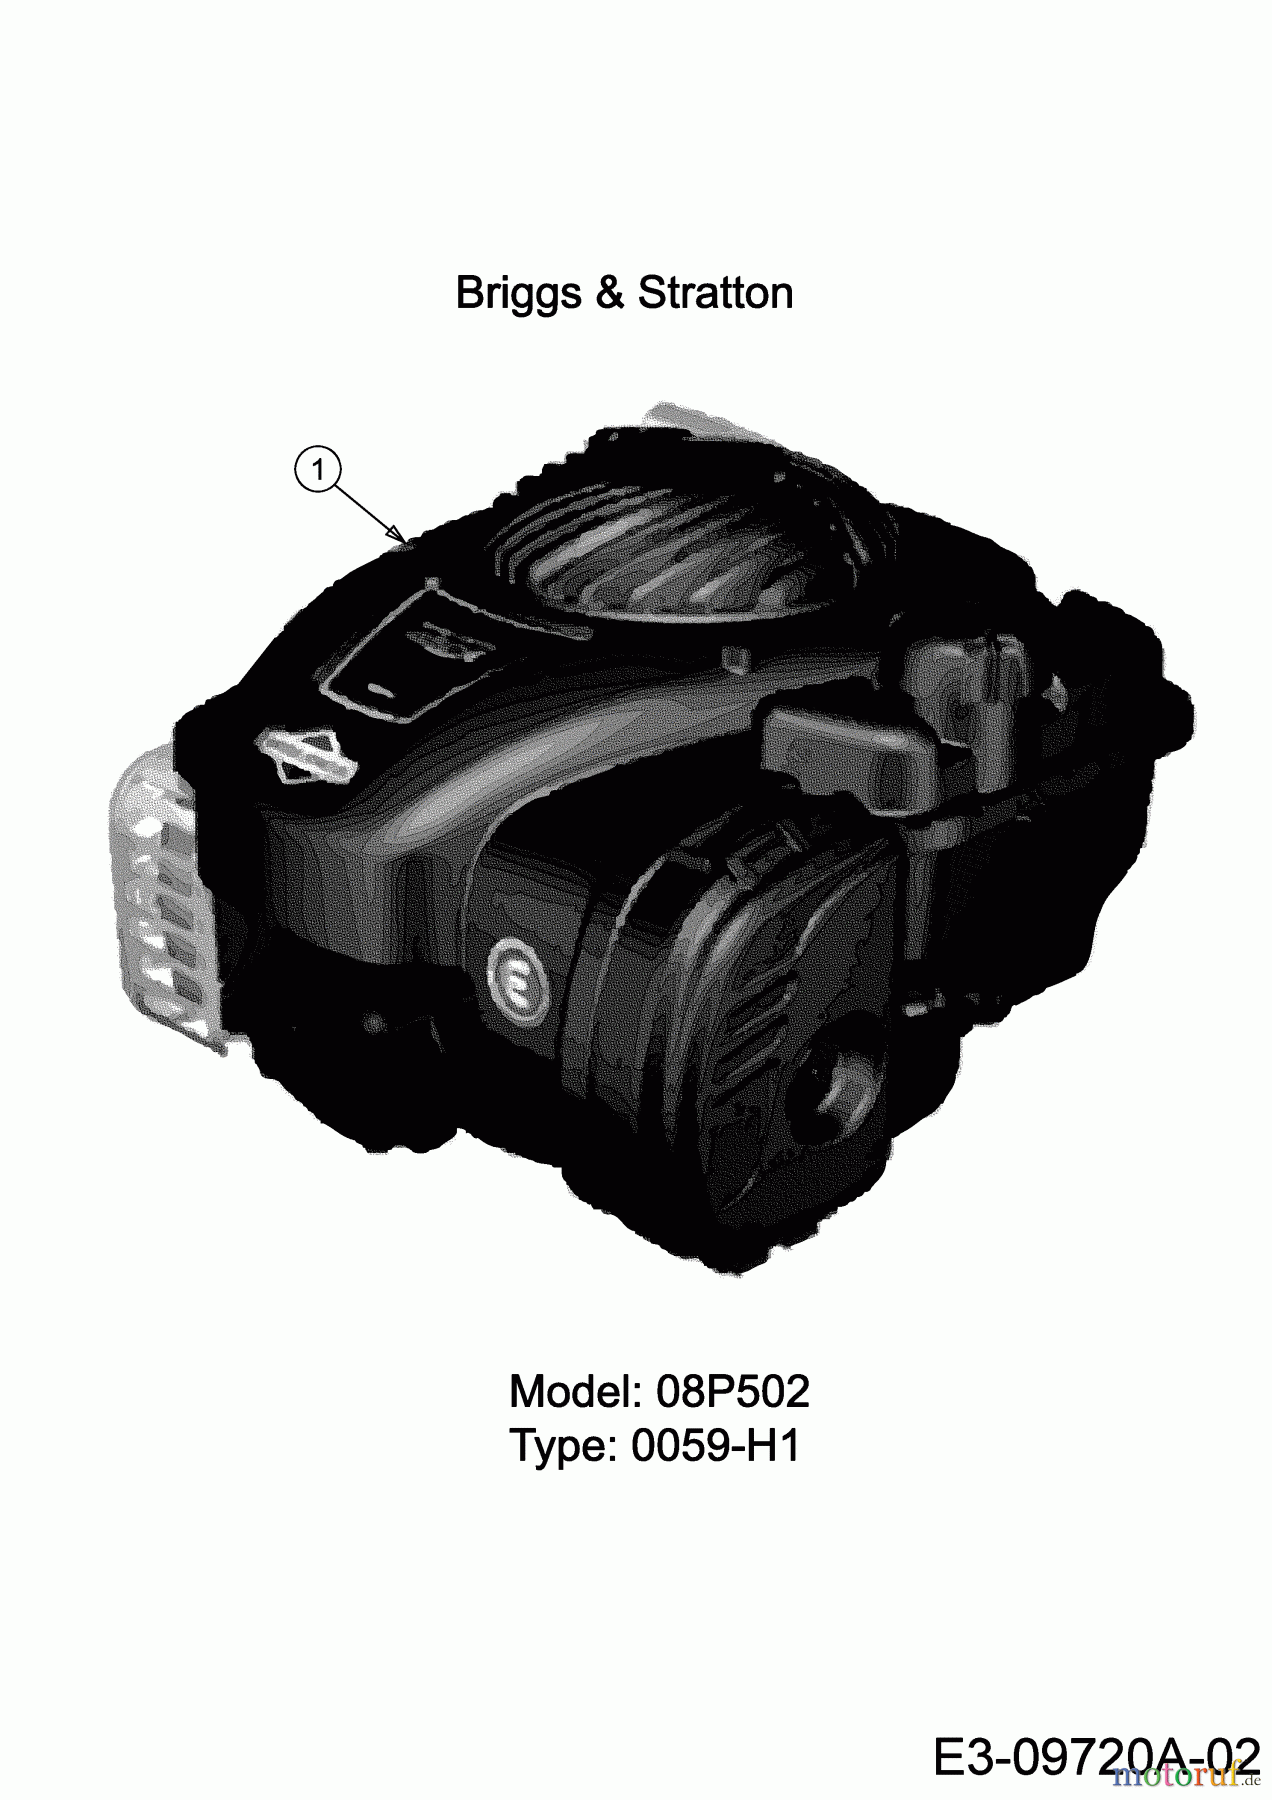  MTD Petrol mower 51 BC 11D-025J600 (2020) Engine Briggs & Stratton